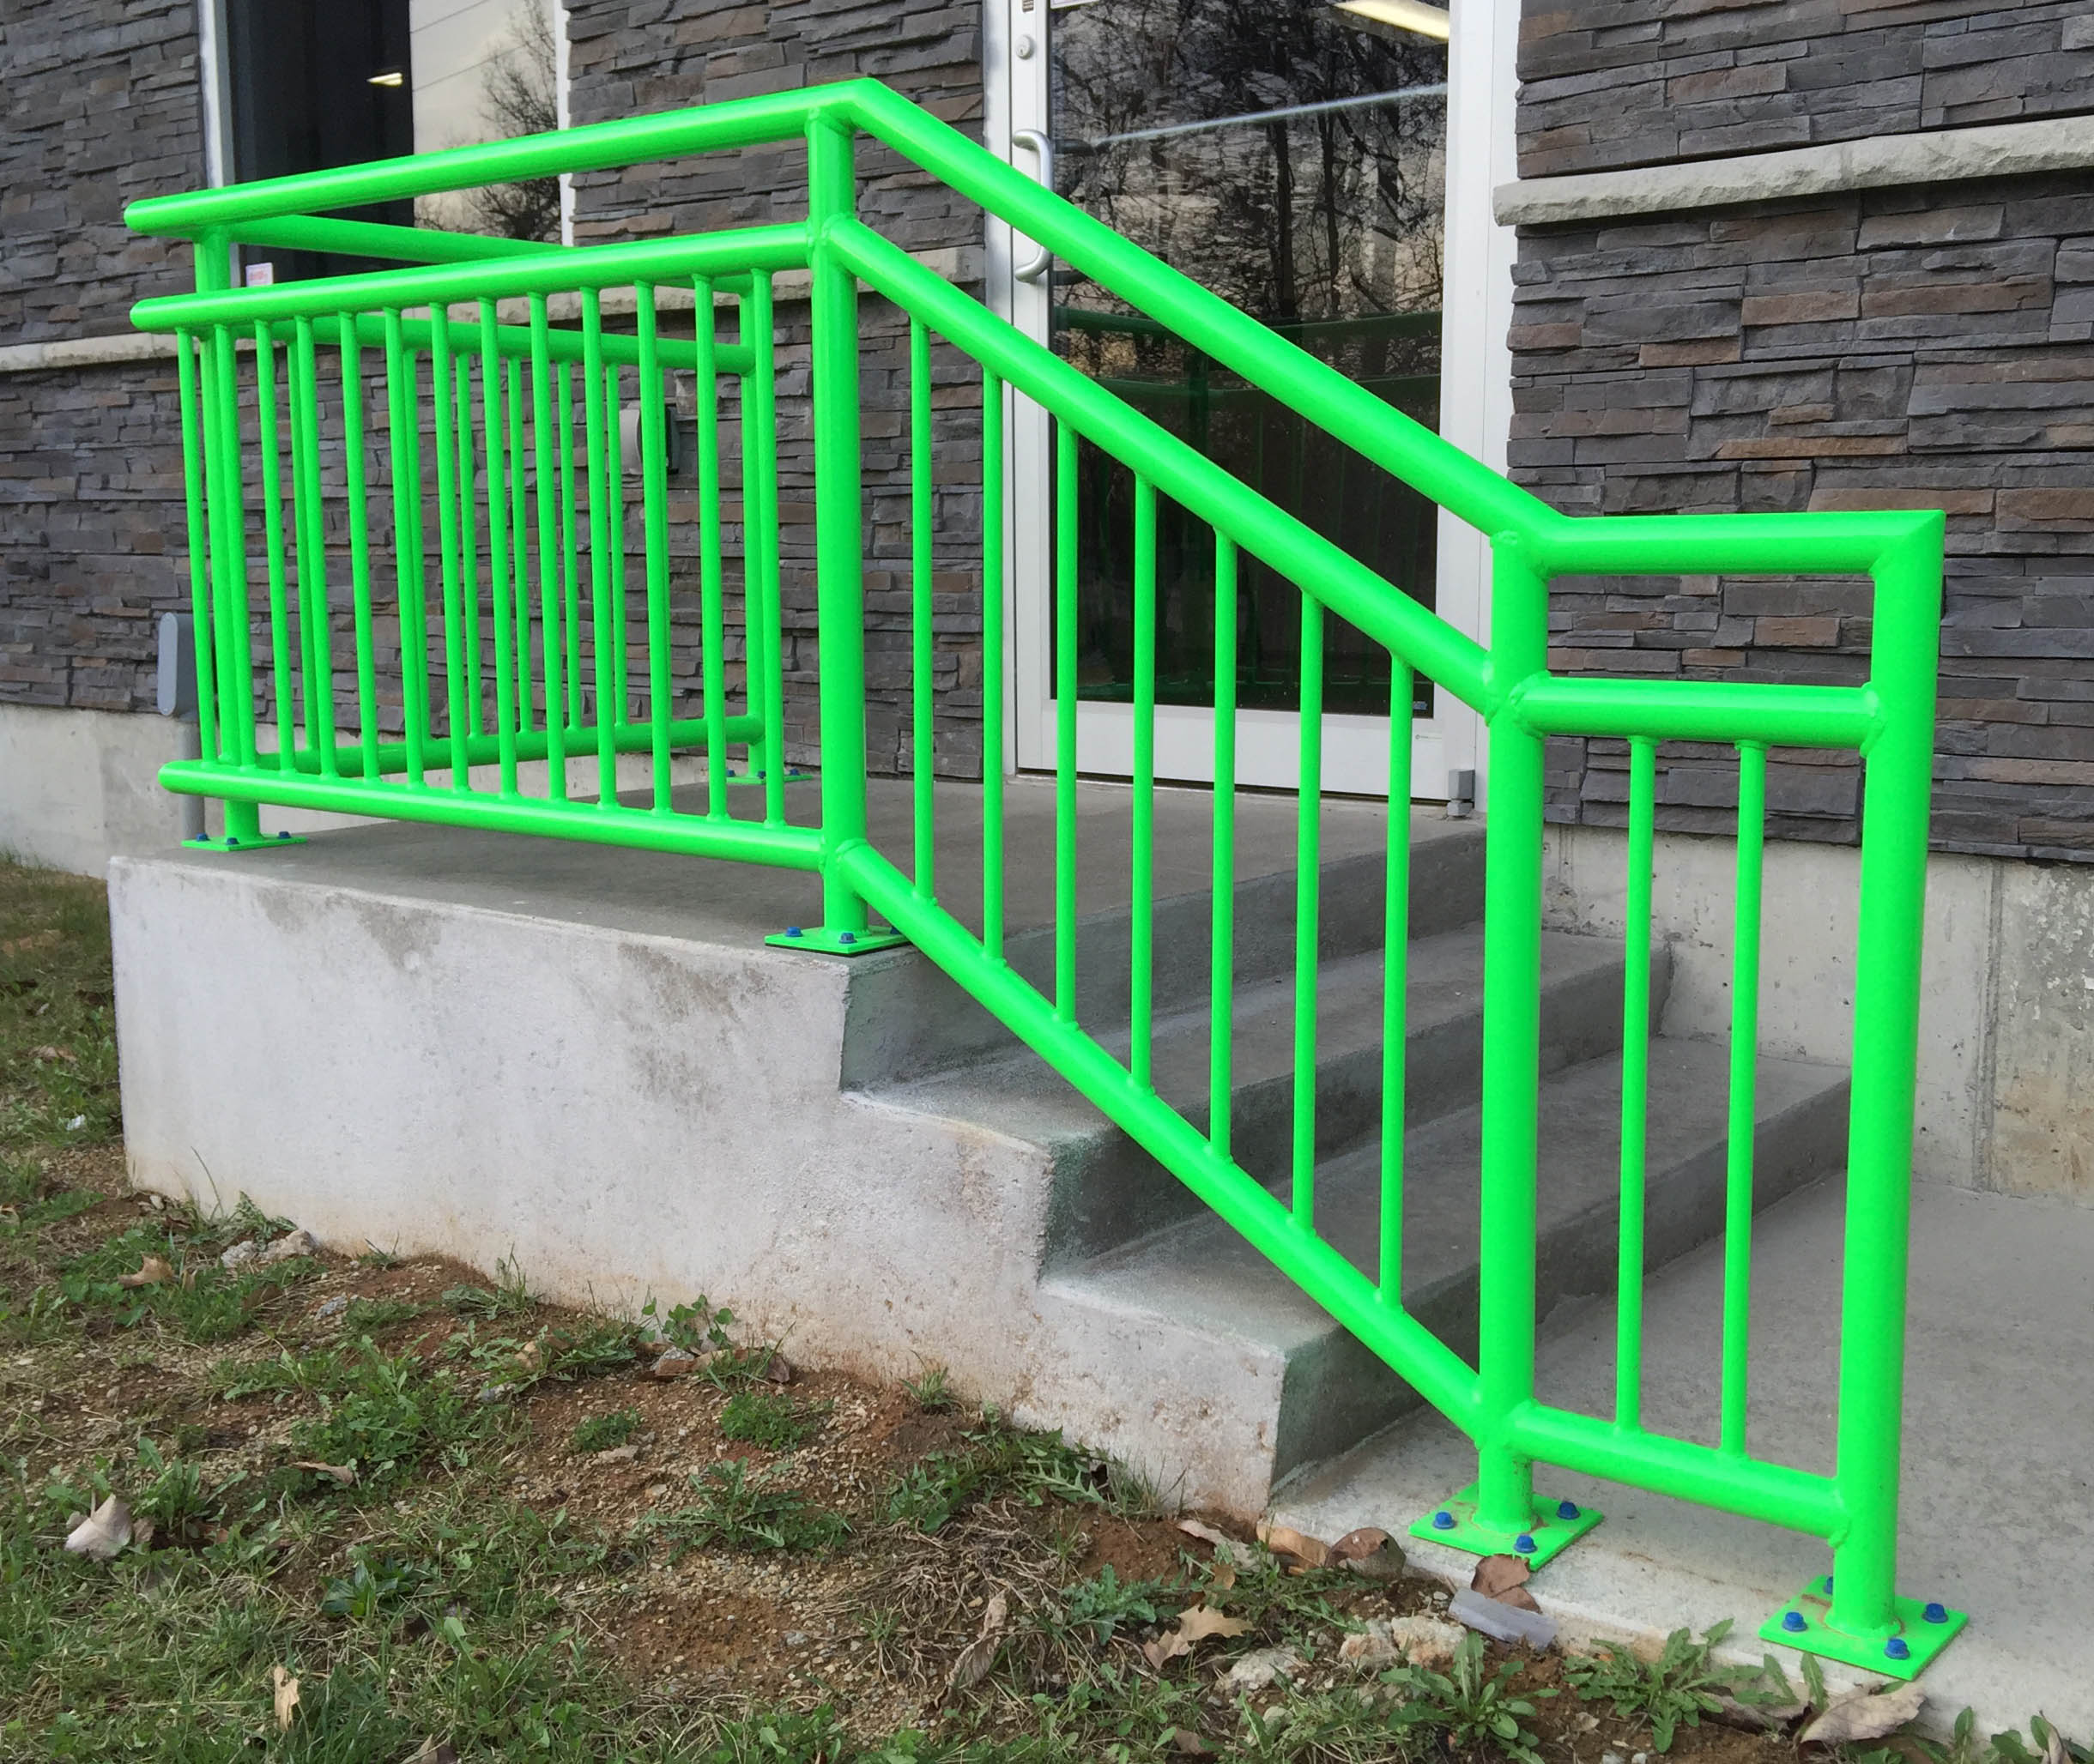 handrails pic 4.jpg